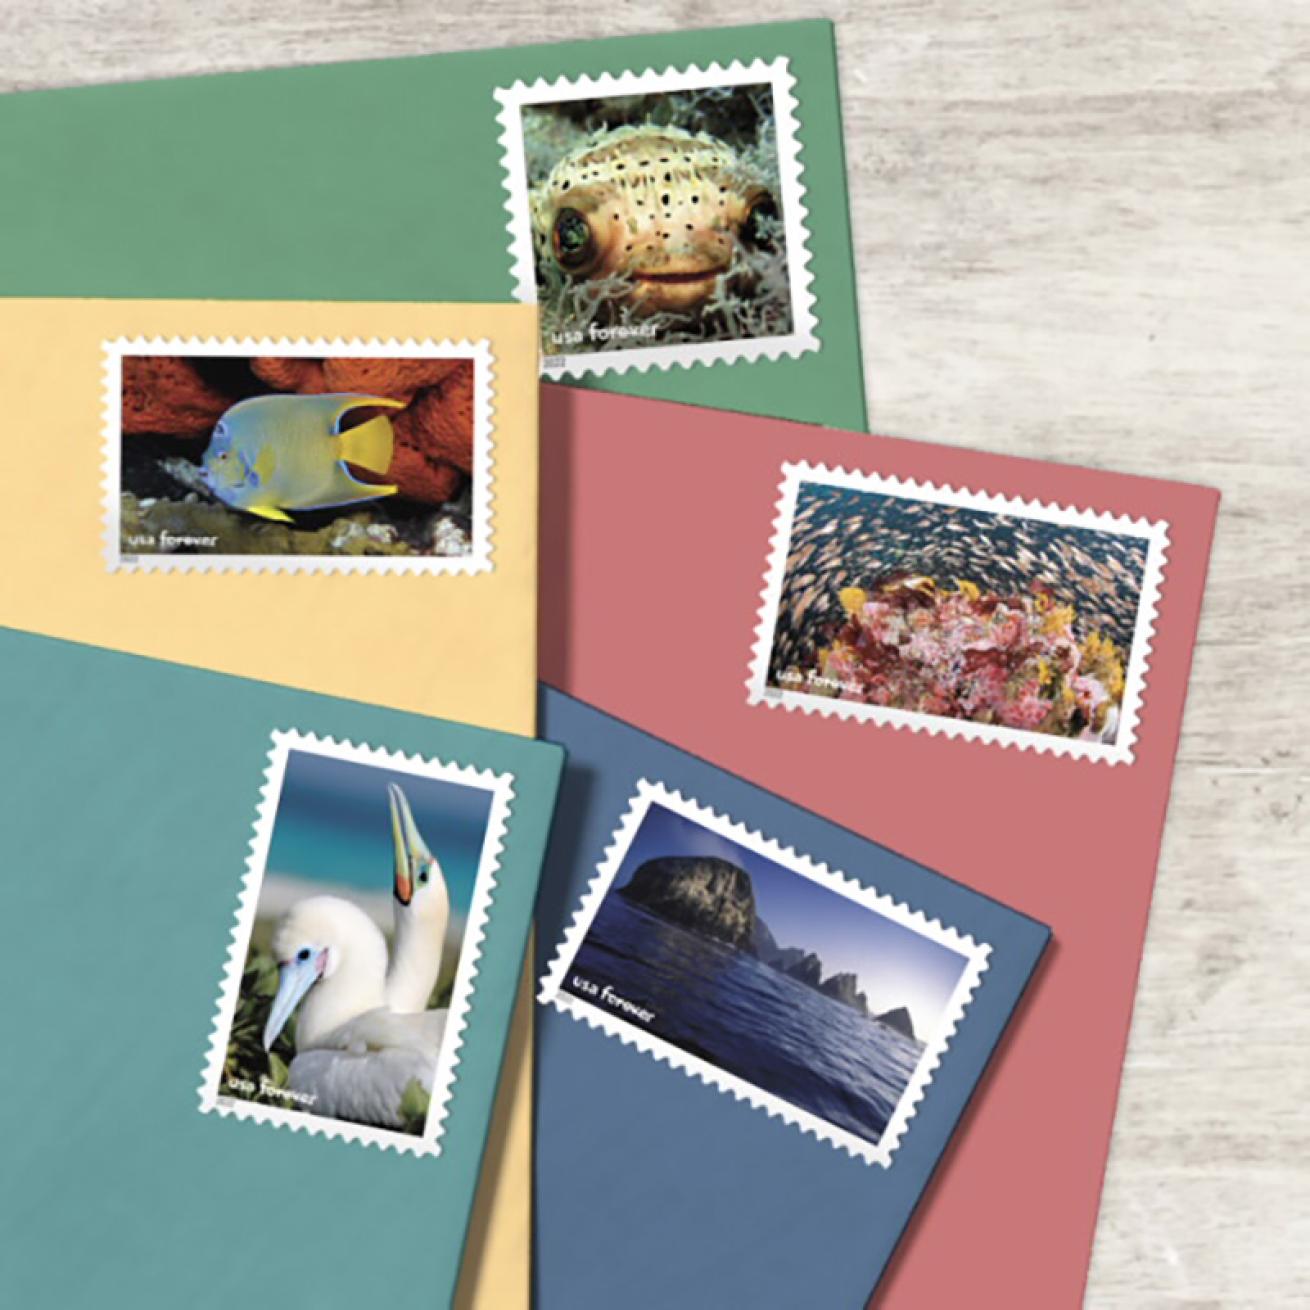 Marine stamps on envelopes